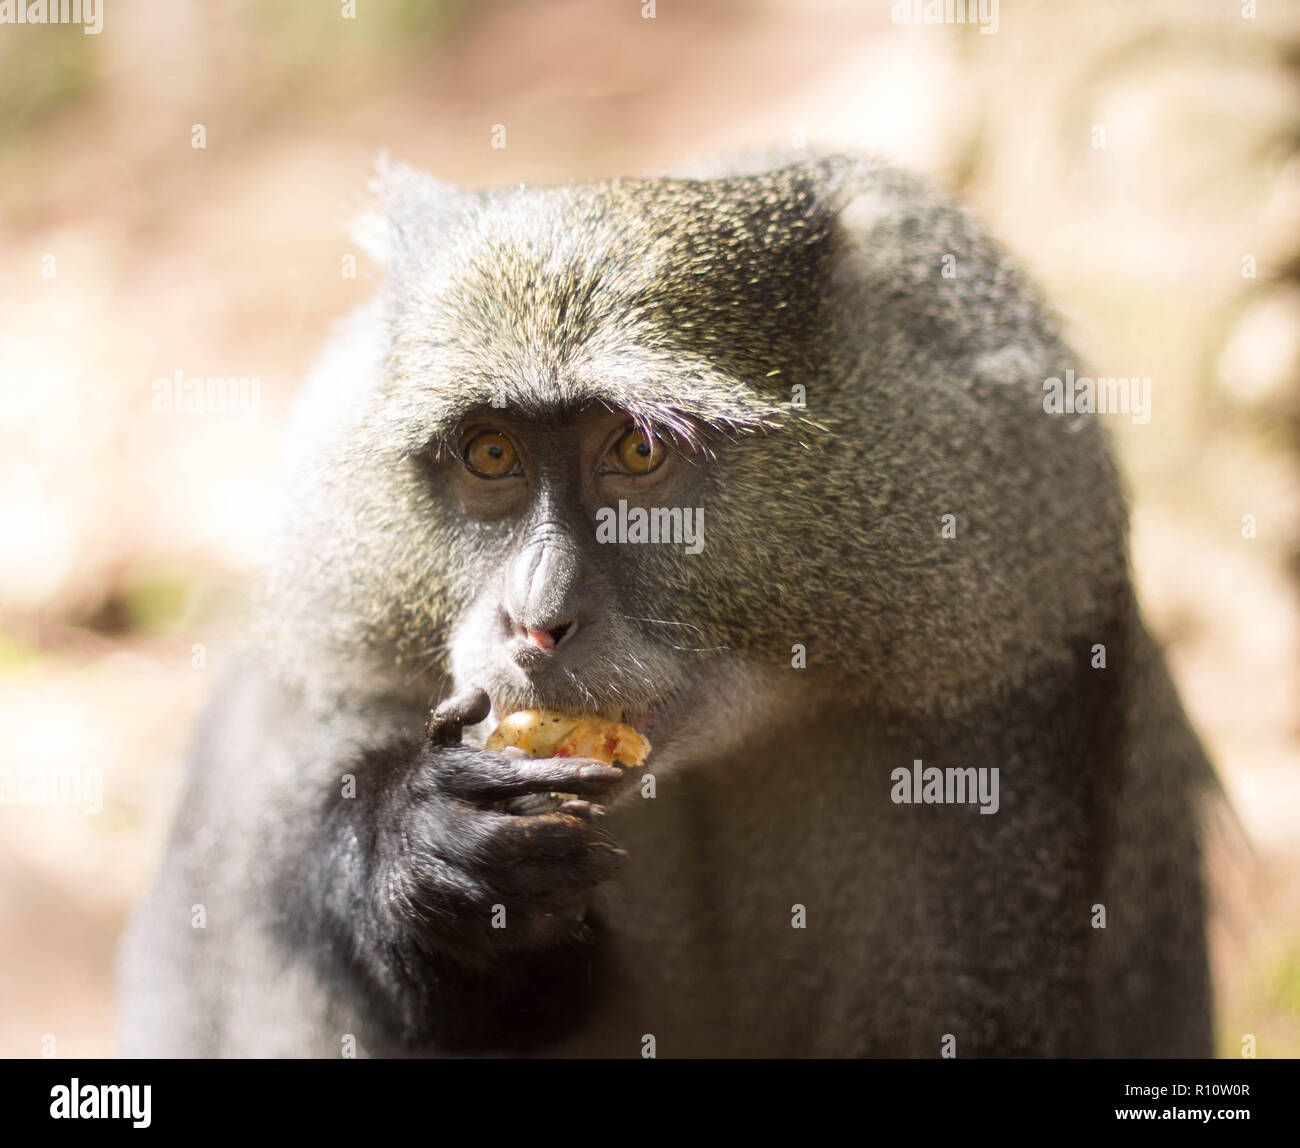 Monkey eating bread Stock Photo